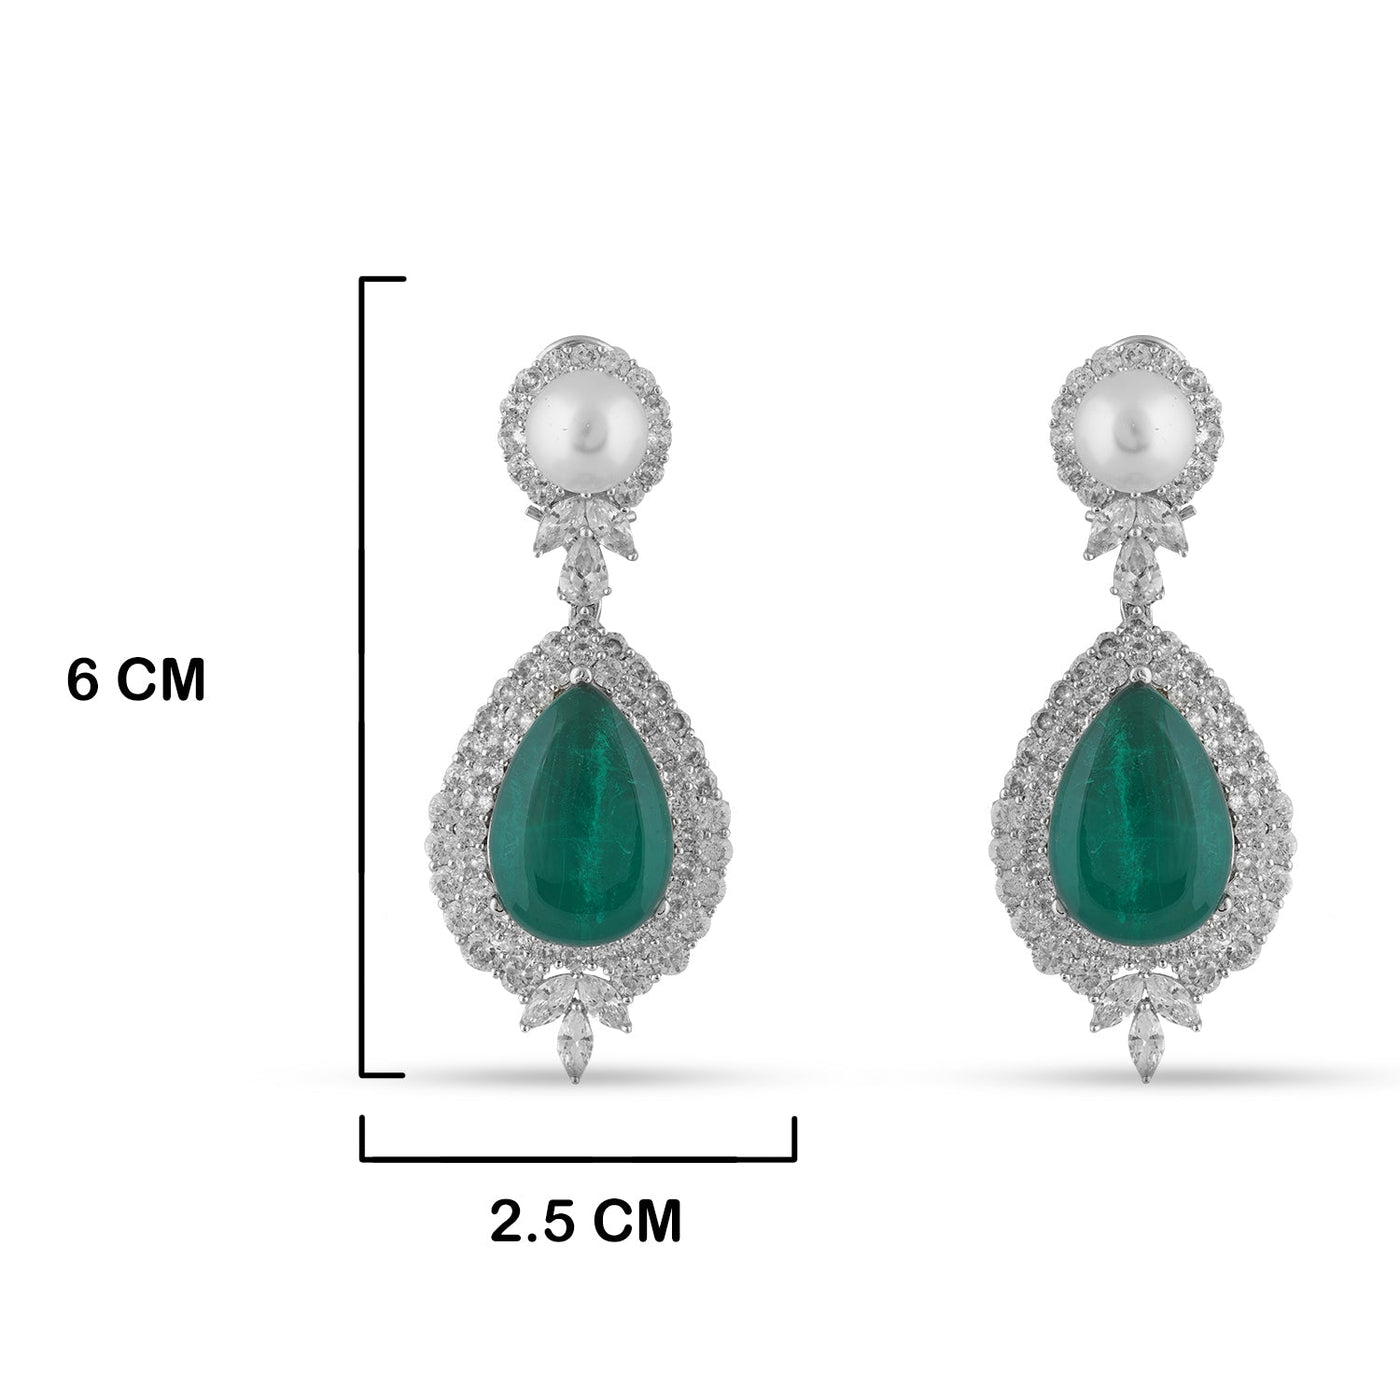 Cubic Zirconia Emerald Green Dangle Earrings with measurements in cm. 6cm by 2.5cm.